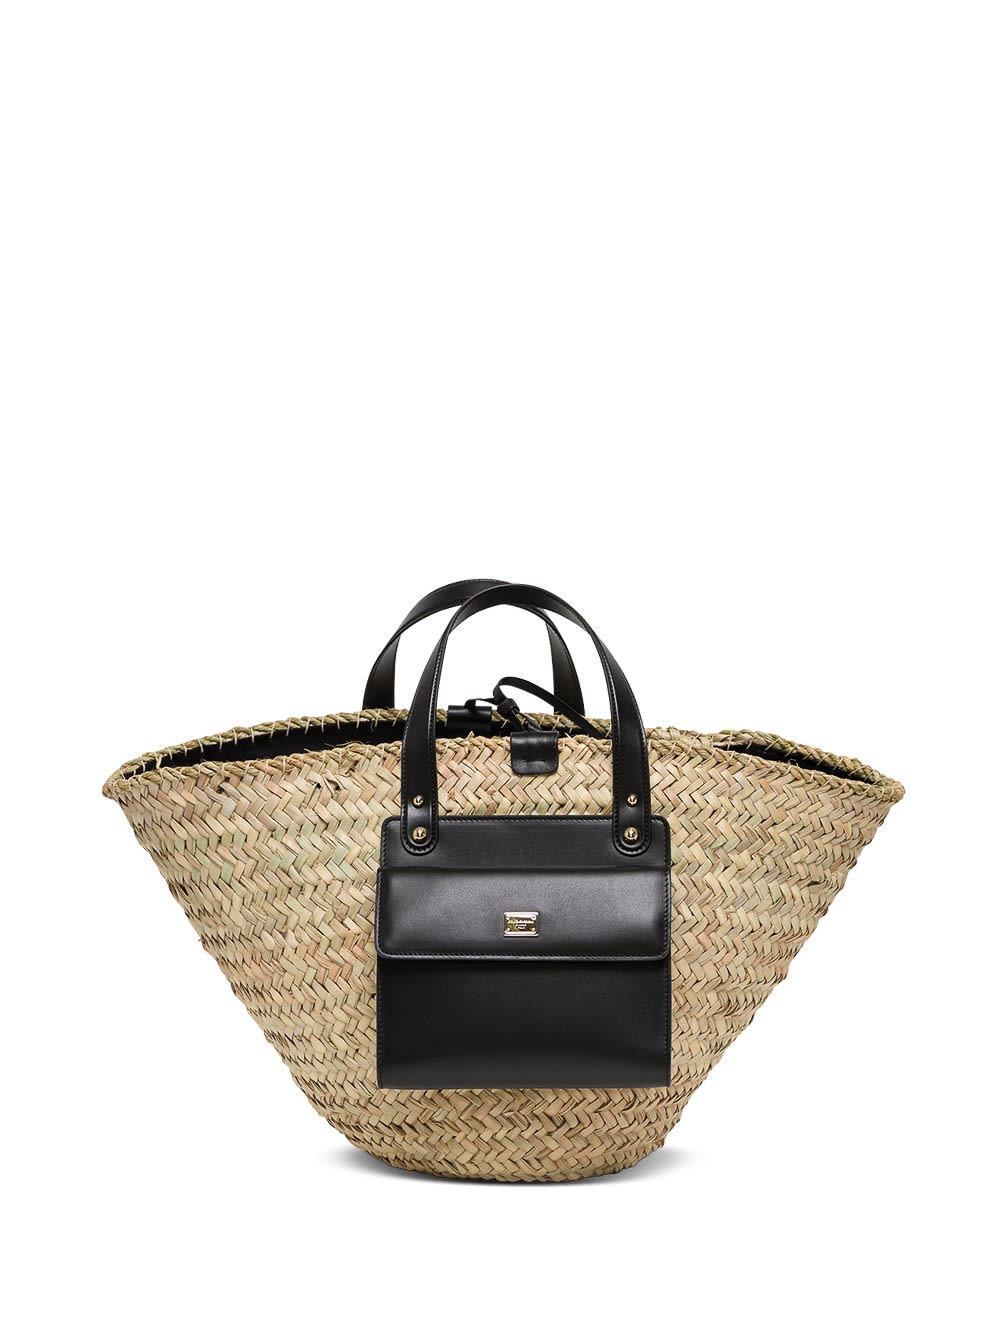 Dolce & Gabbana Kendra Straw Handbag